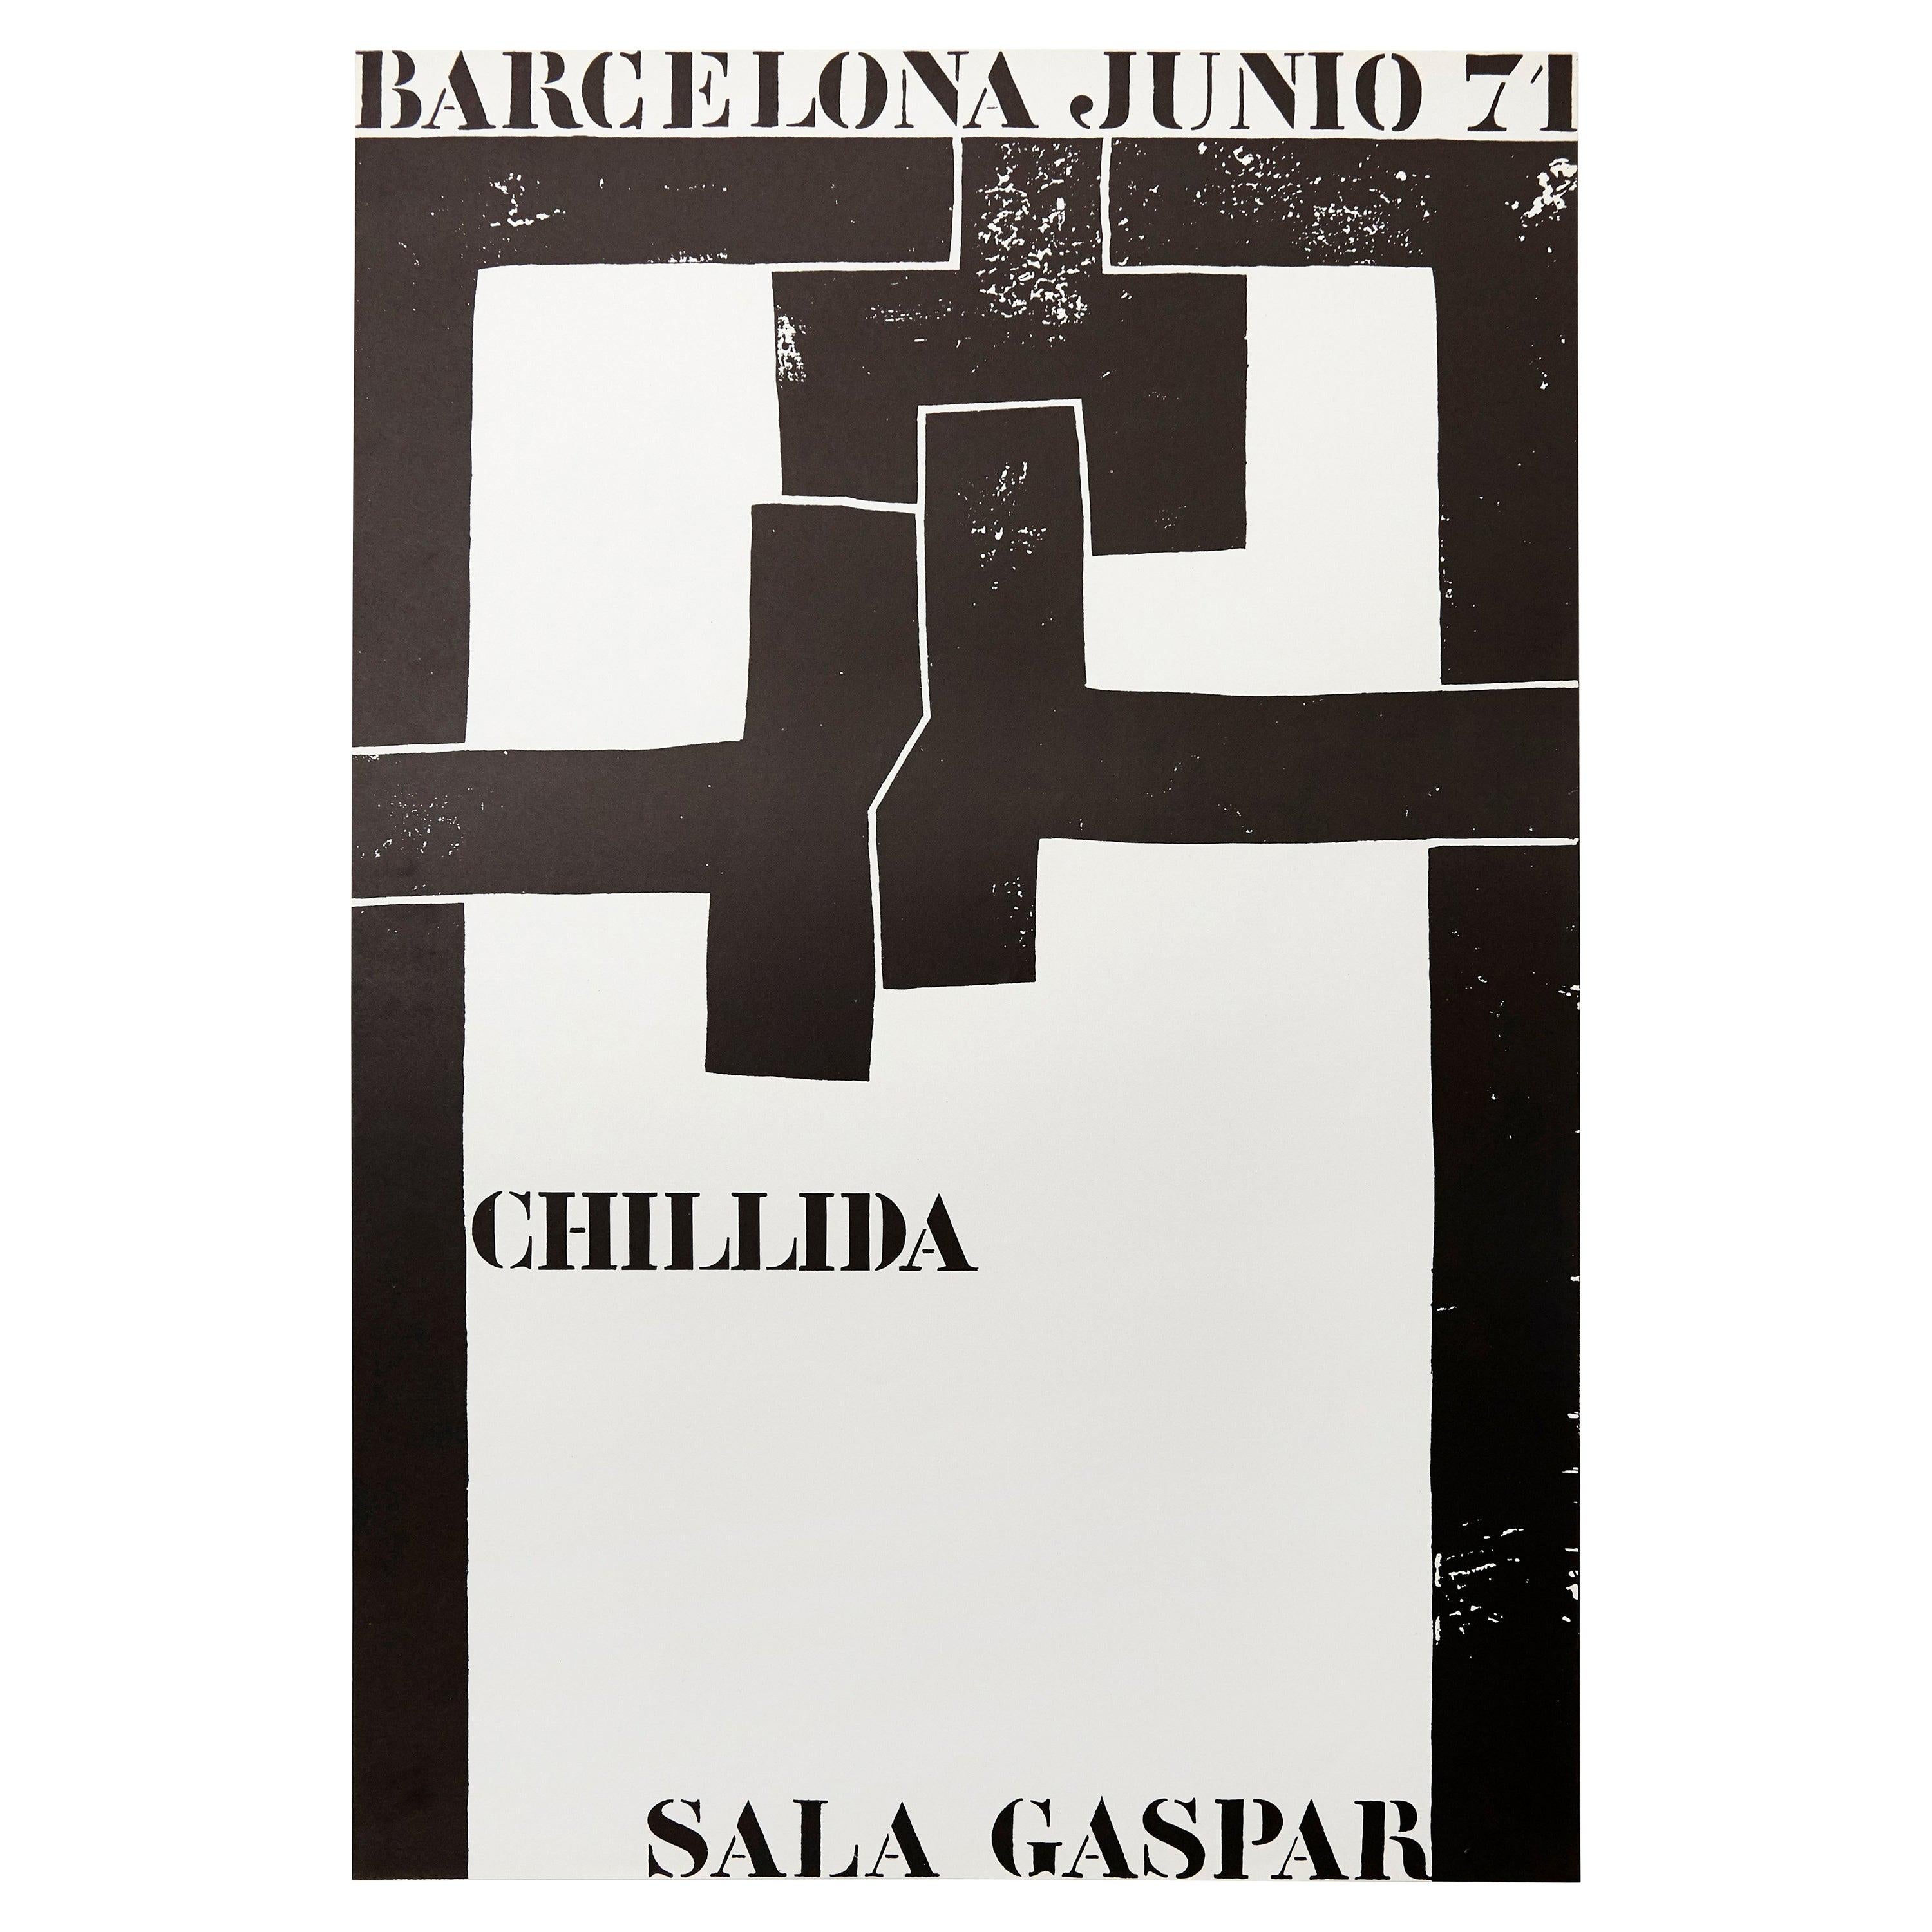 Eduardo Chillida Poster